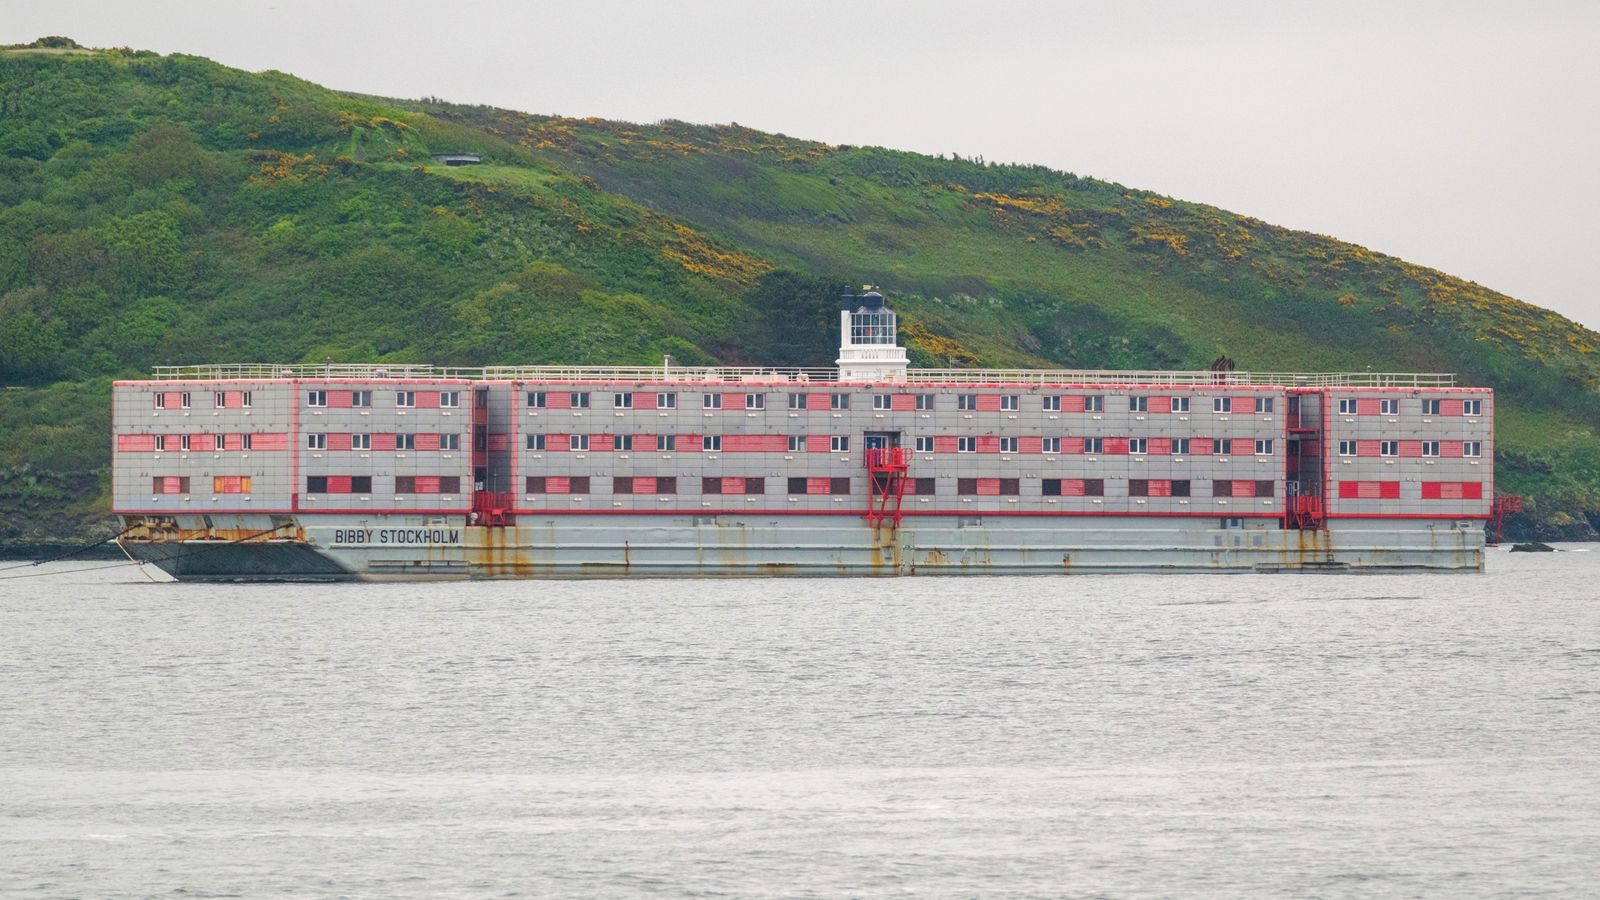 Bibby Stockholm: Barge set to house asylum seekers arrives in UK waters